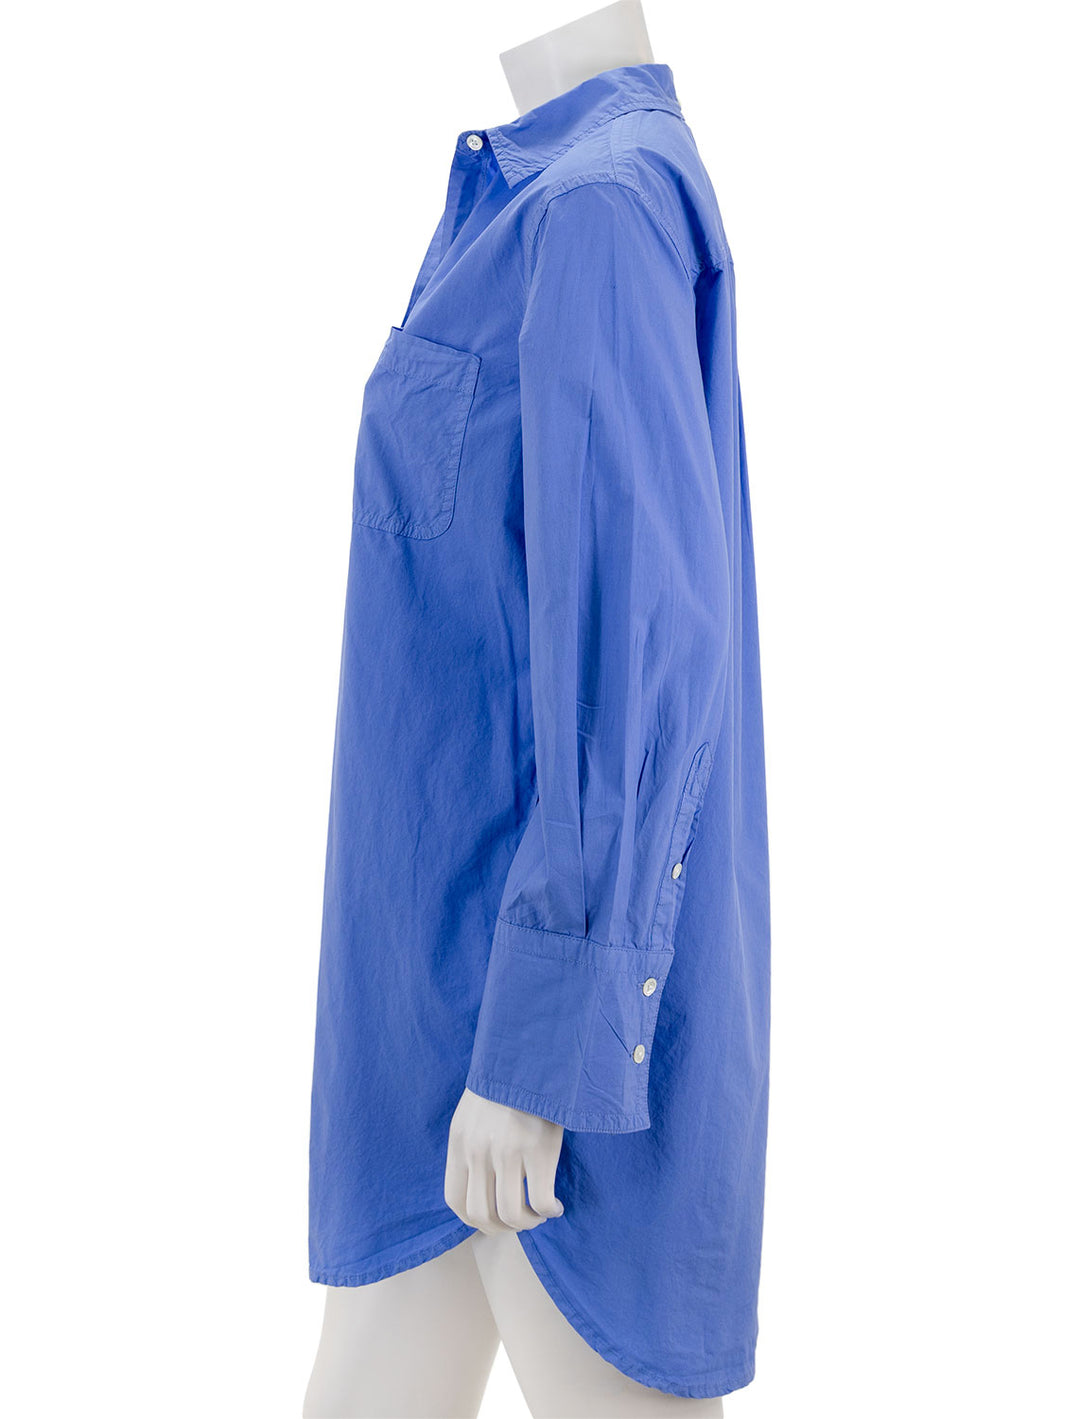 Side view of Alex Mill's belle shirt dress in french blue paper poplin.